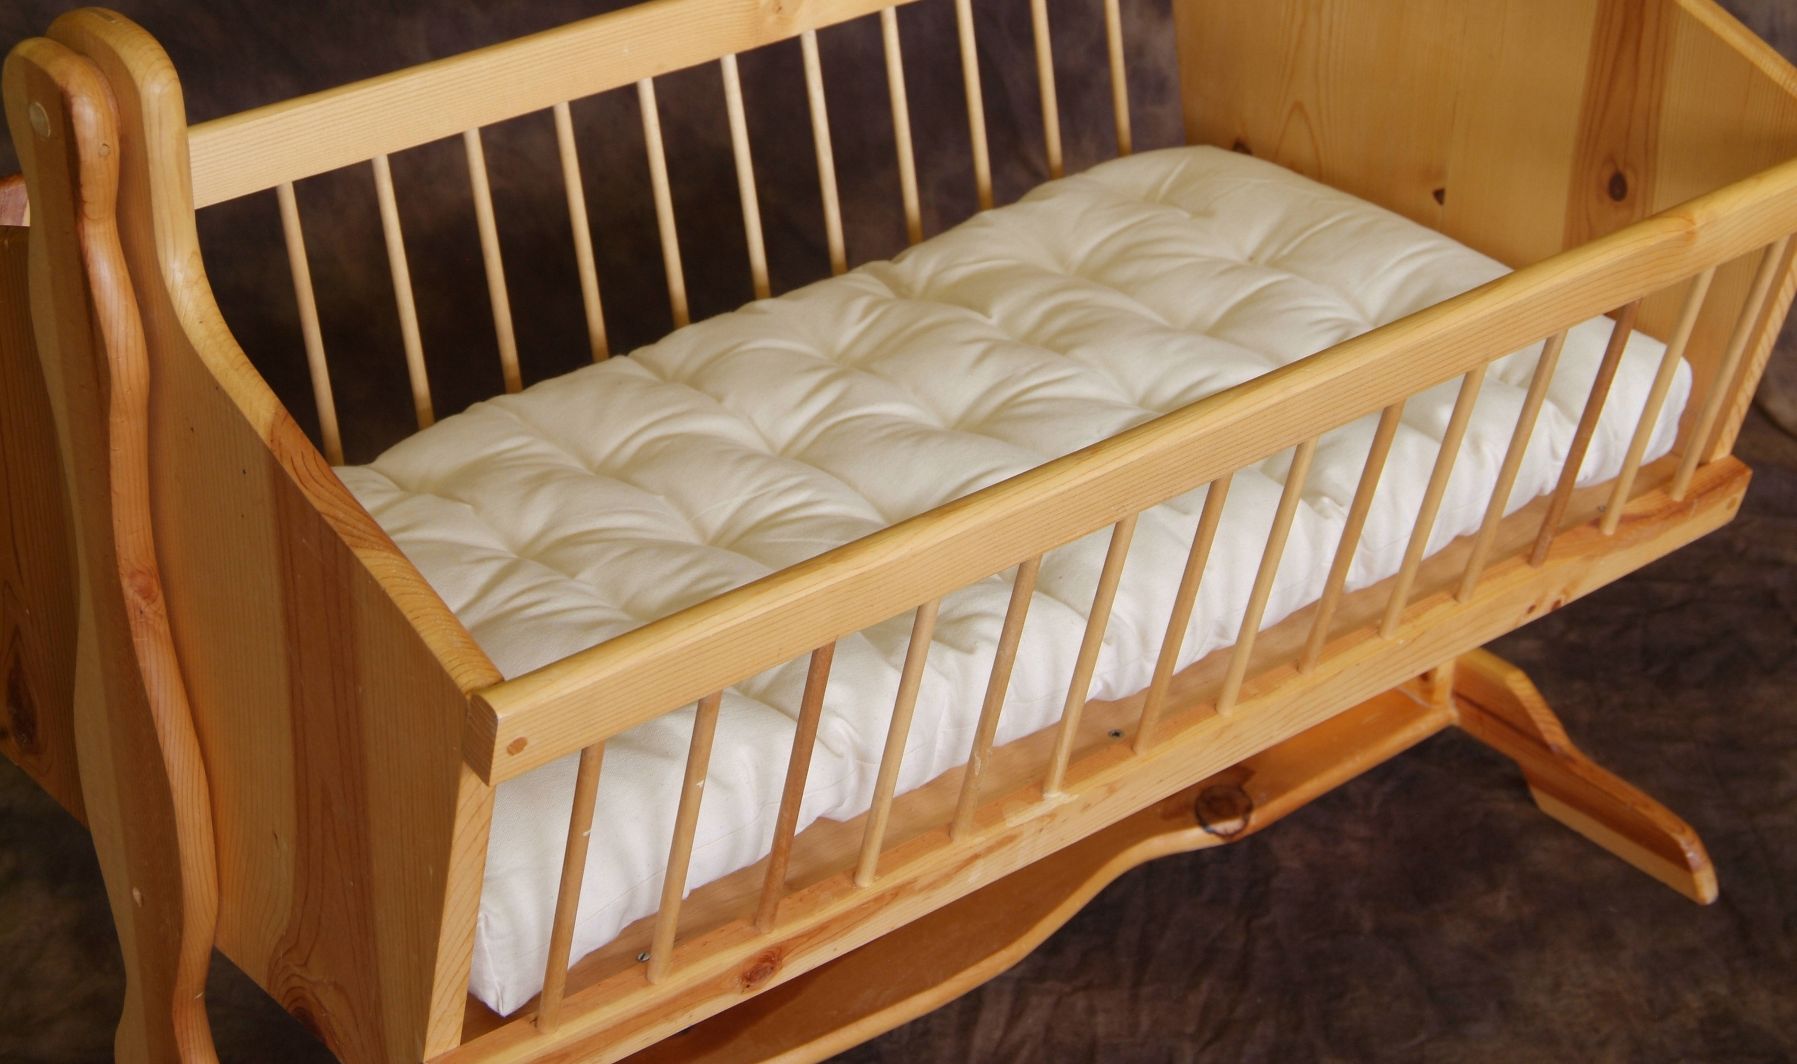 best bassinet mattress for infant